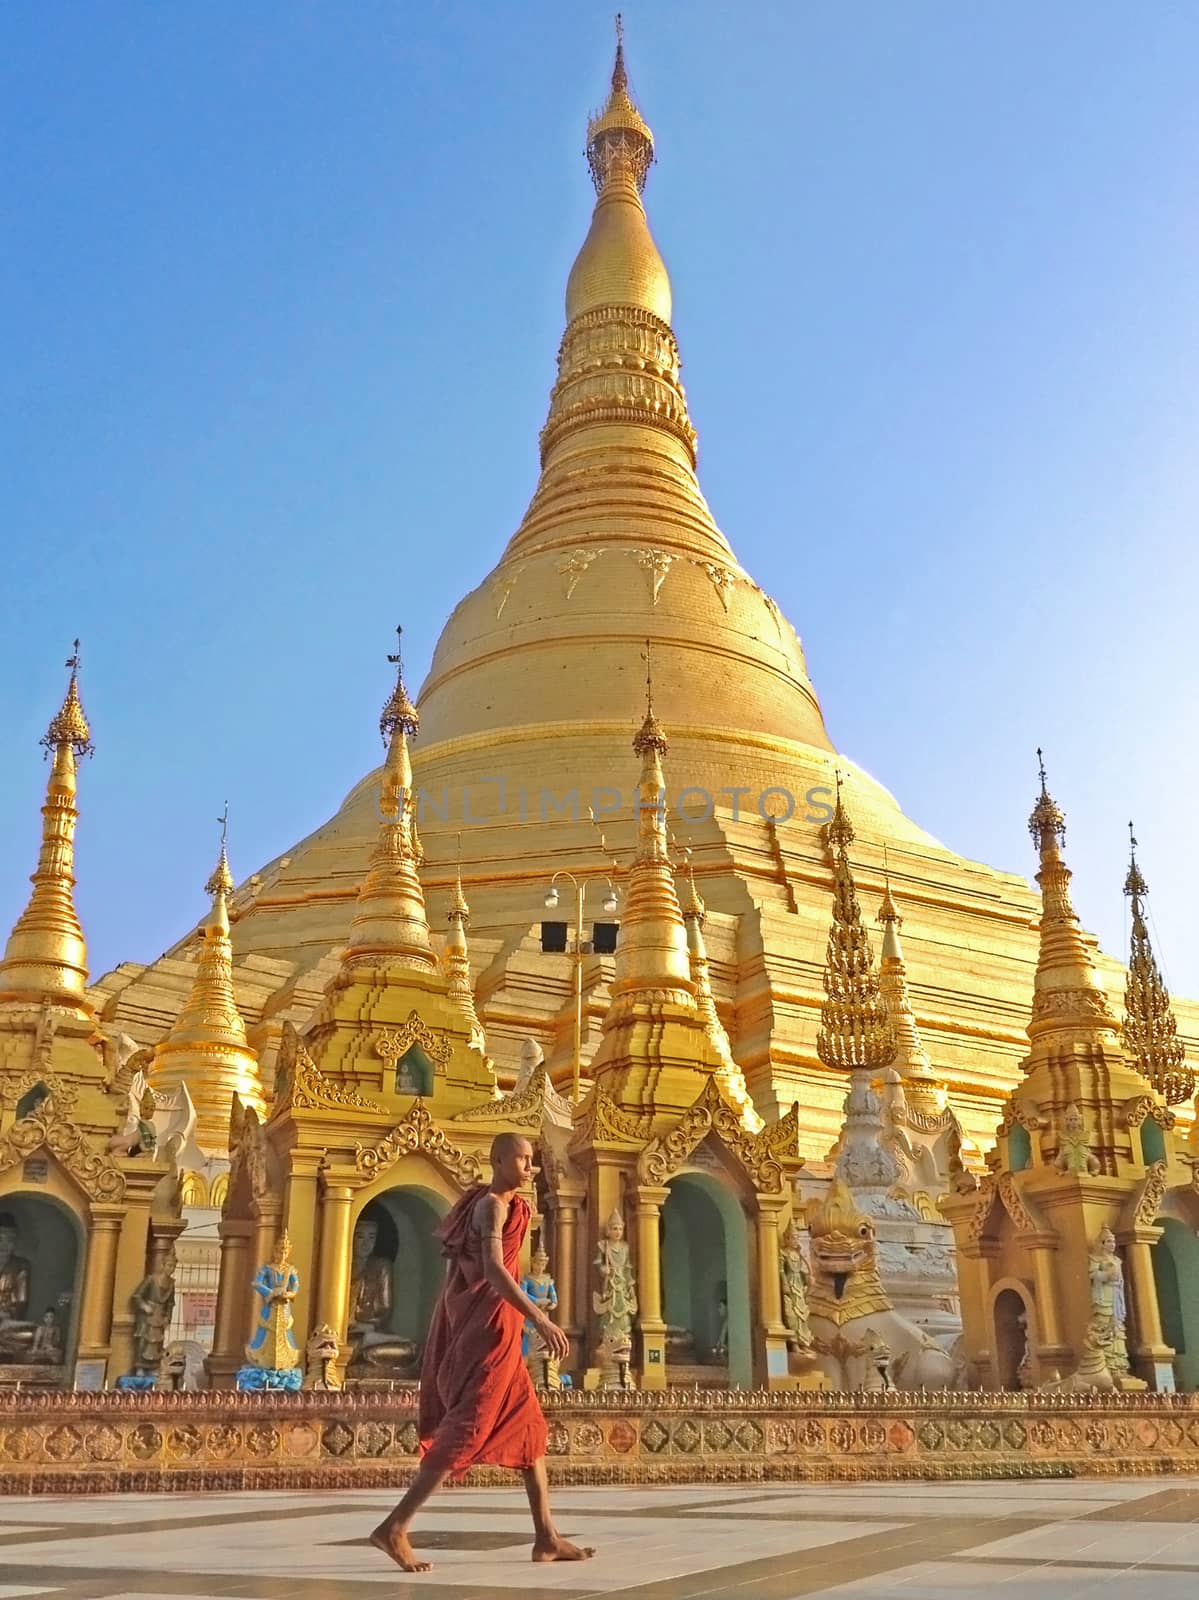  Buddhist monk walking in Shwedagon pagoda, the famous atrraction in Myanmar.